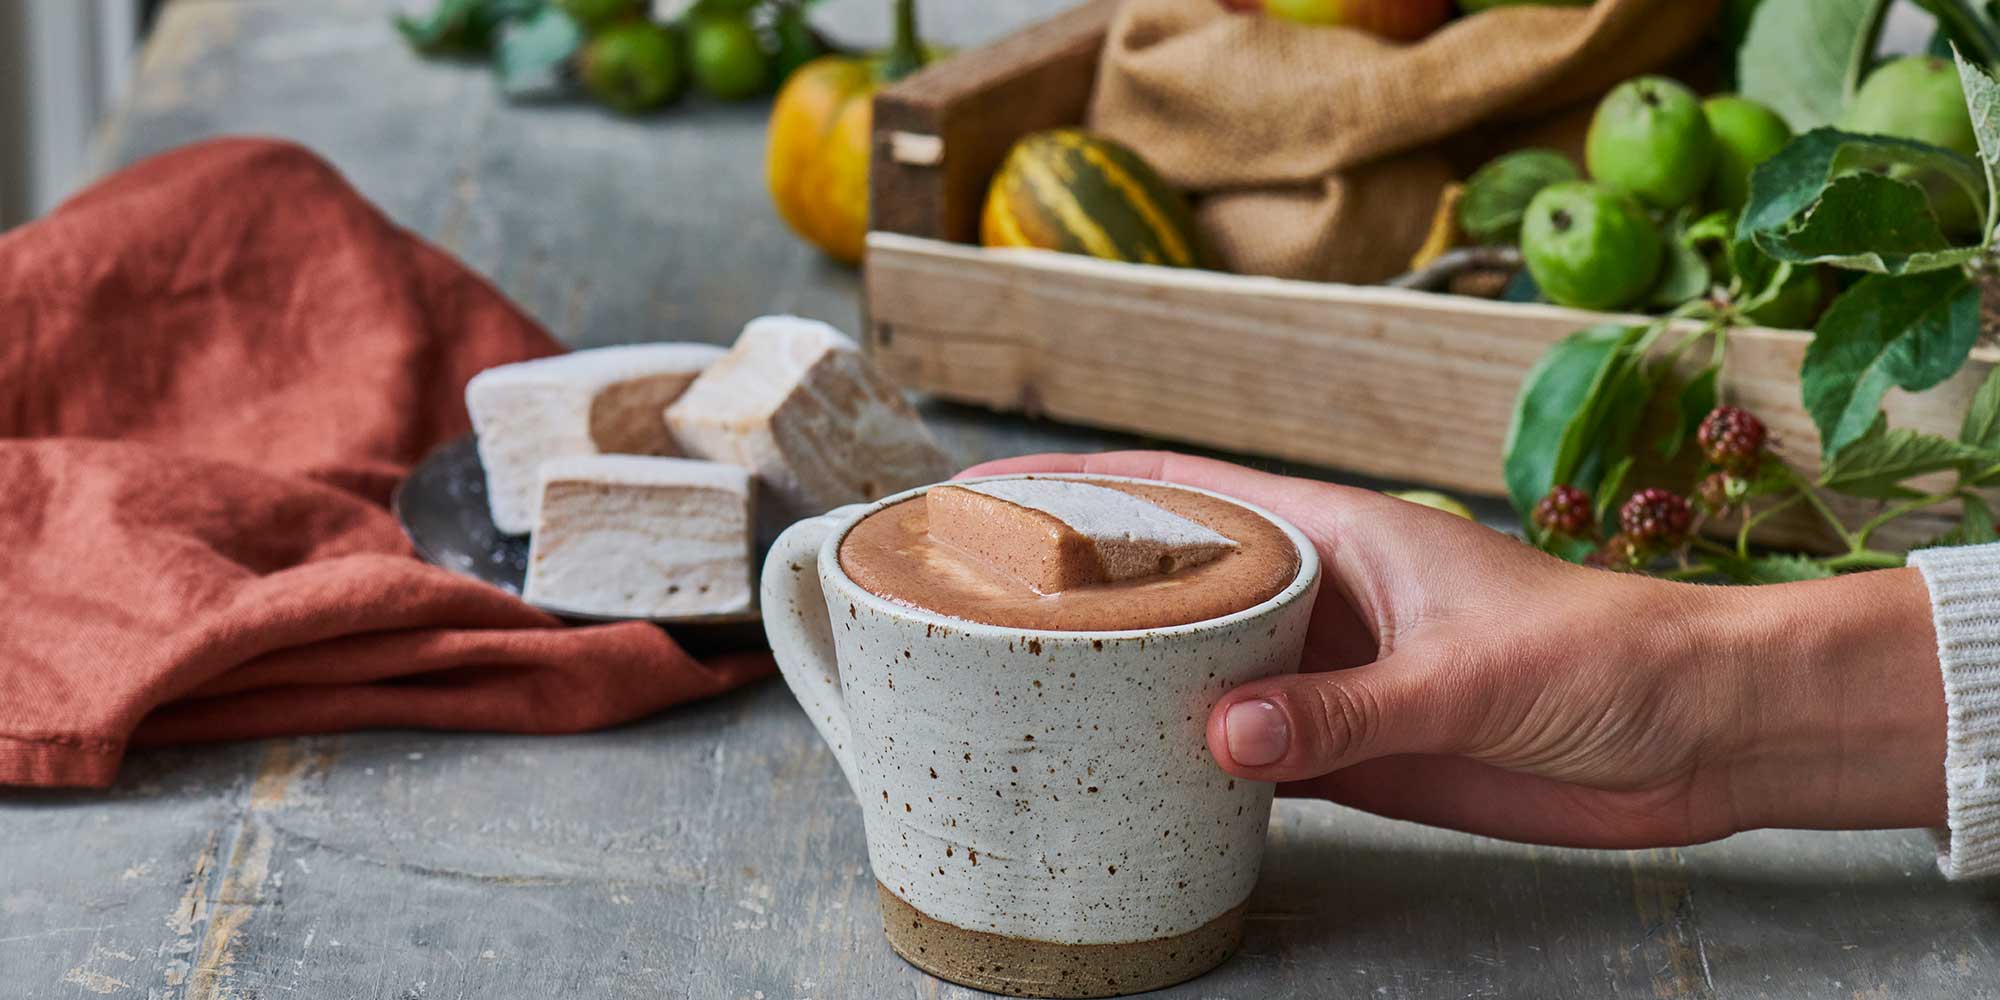 Hot chocolate season returns with pumpkin spice